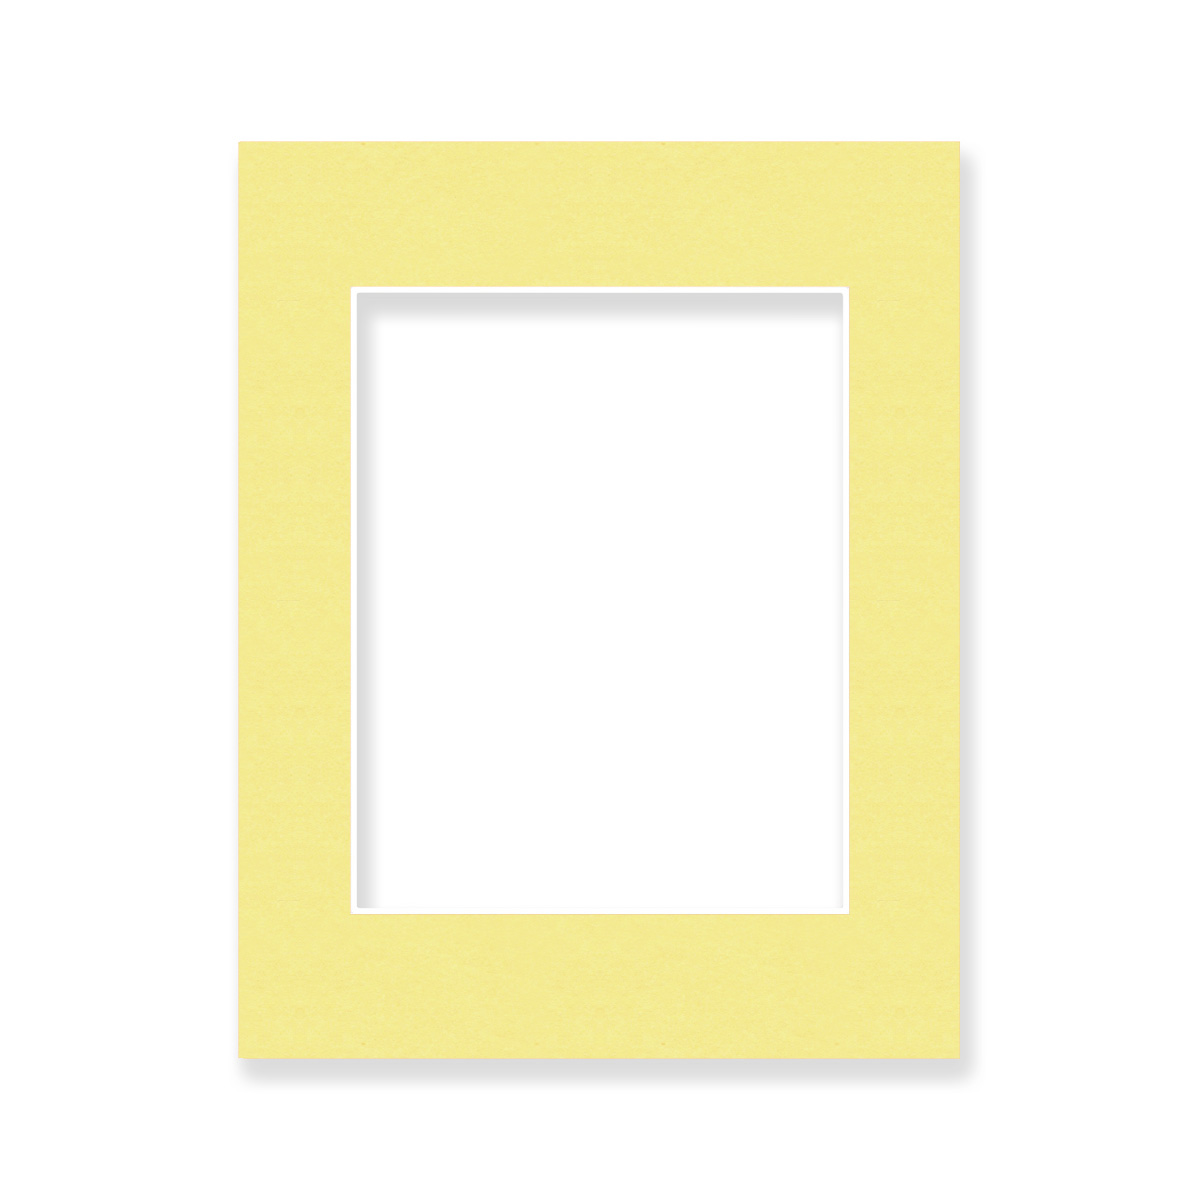 0.060 White Core Single Mats : 11x14 For 8x10 Artwork